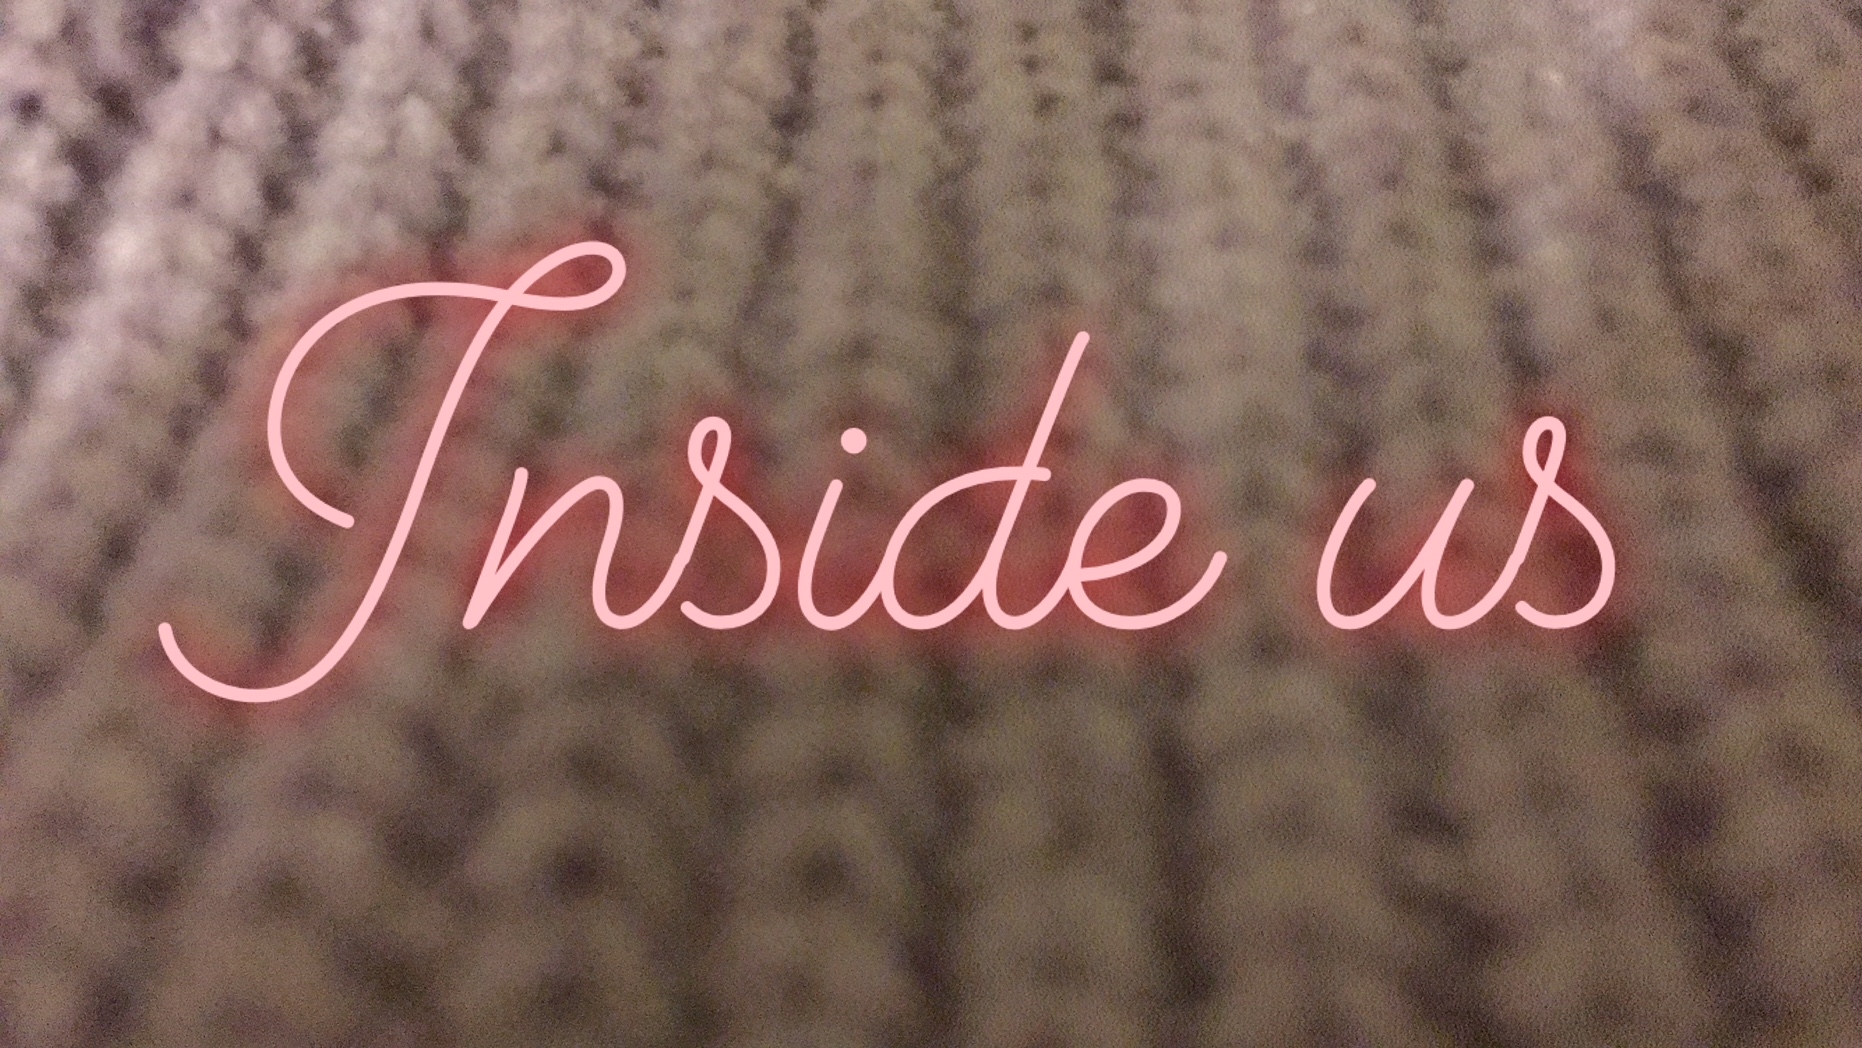  Inside us